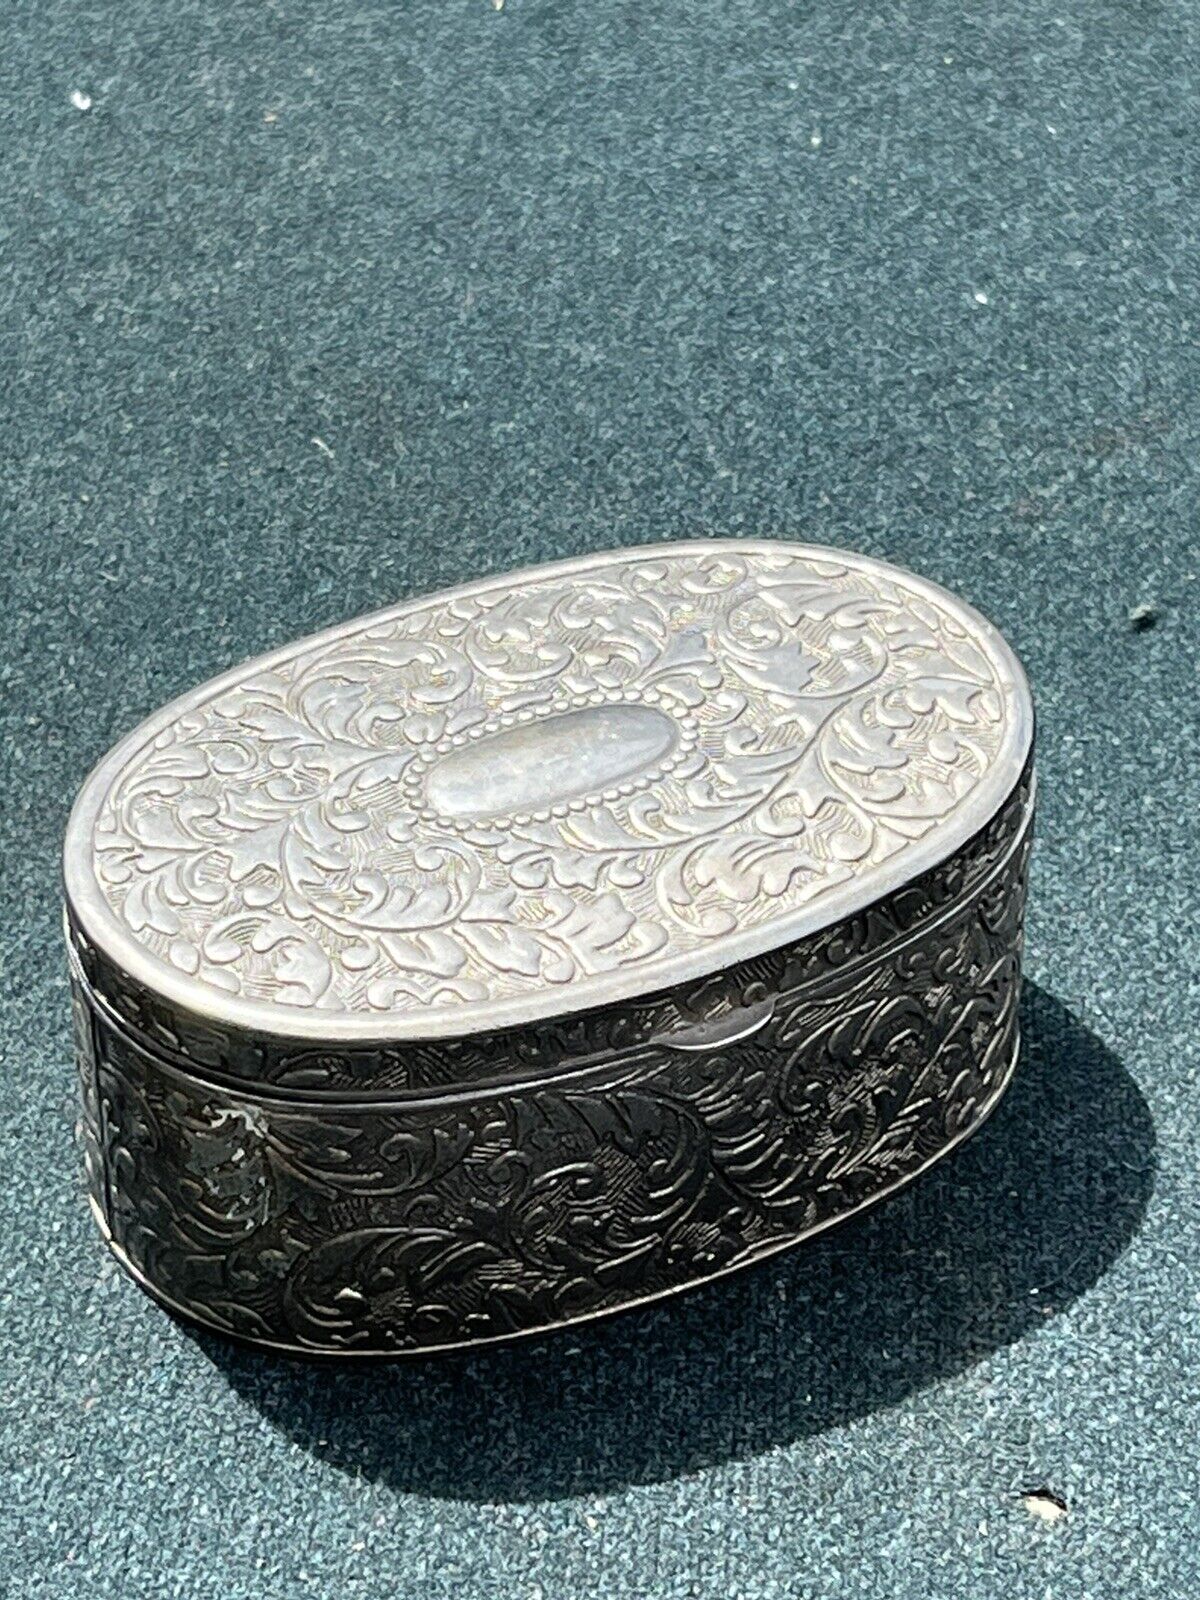 Silver Plate Trinket Box.